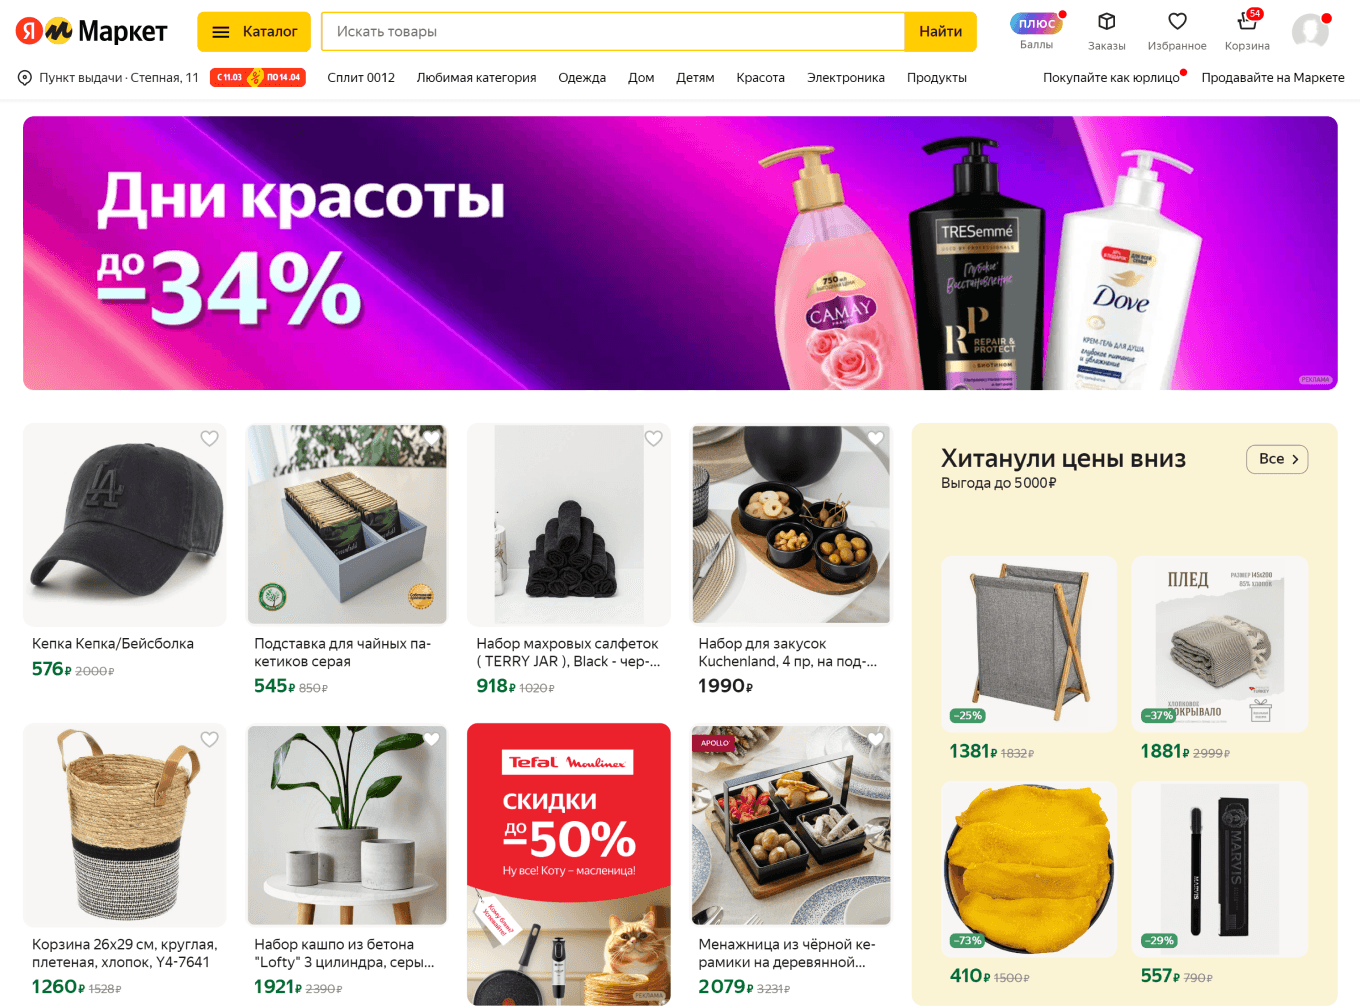 Российский маркетплейс «Яндекс Маркет»